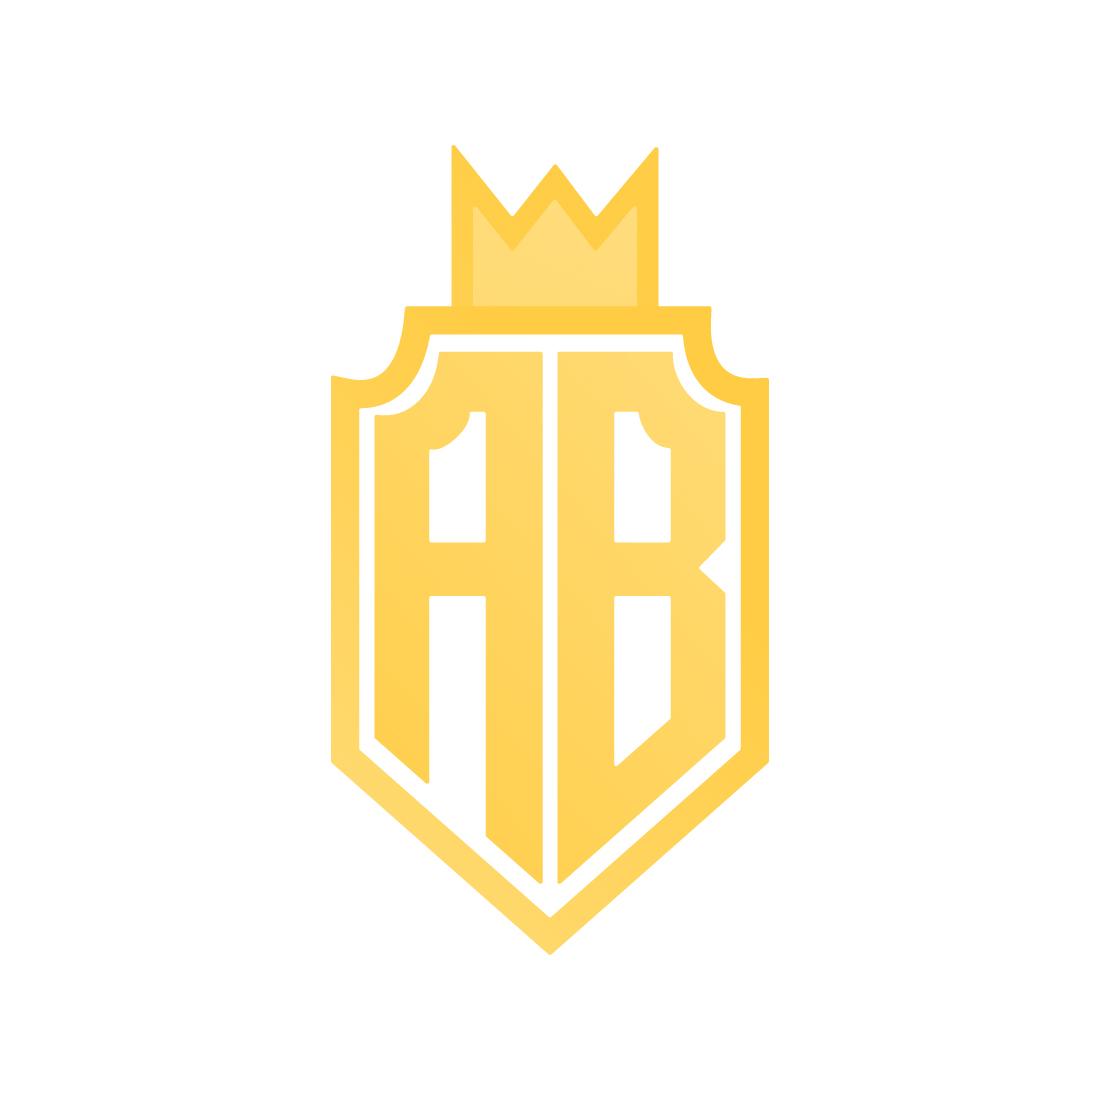 Initials AB Crown logo design vector images AB letter logo template arts BA golden color Crown logo best icon preview image.